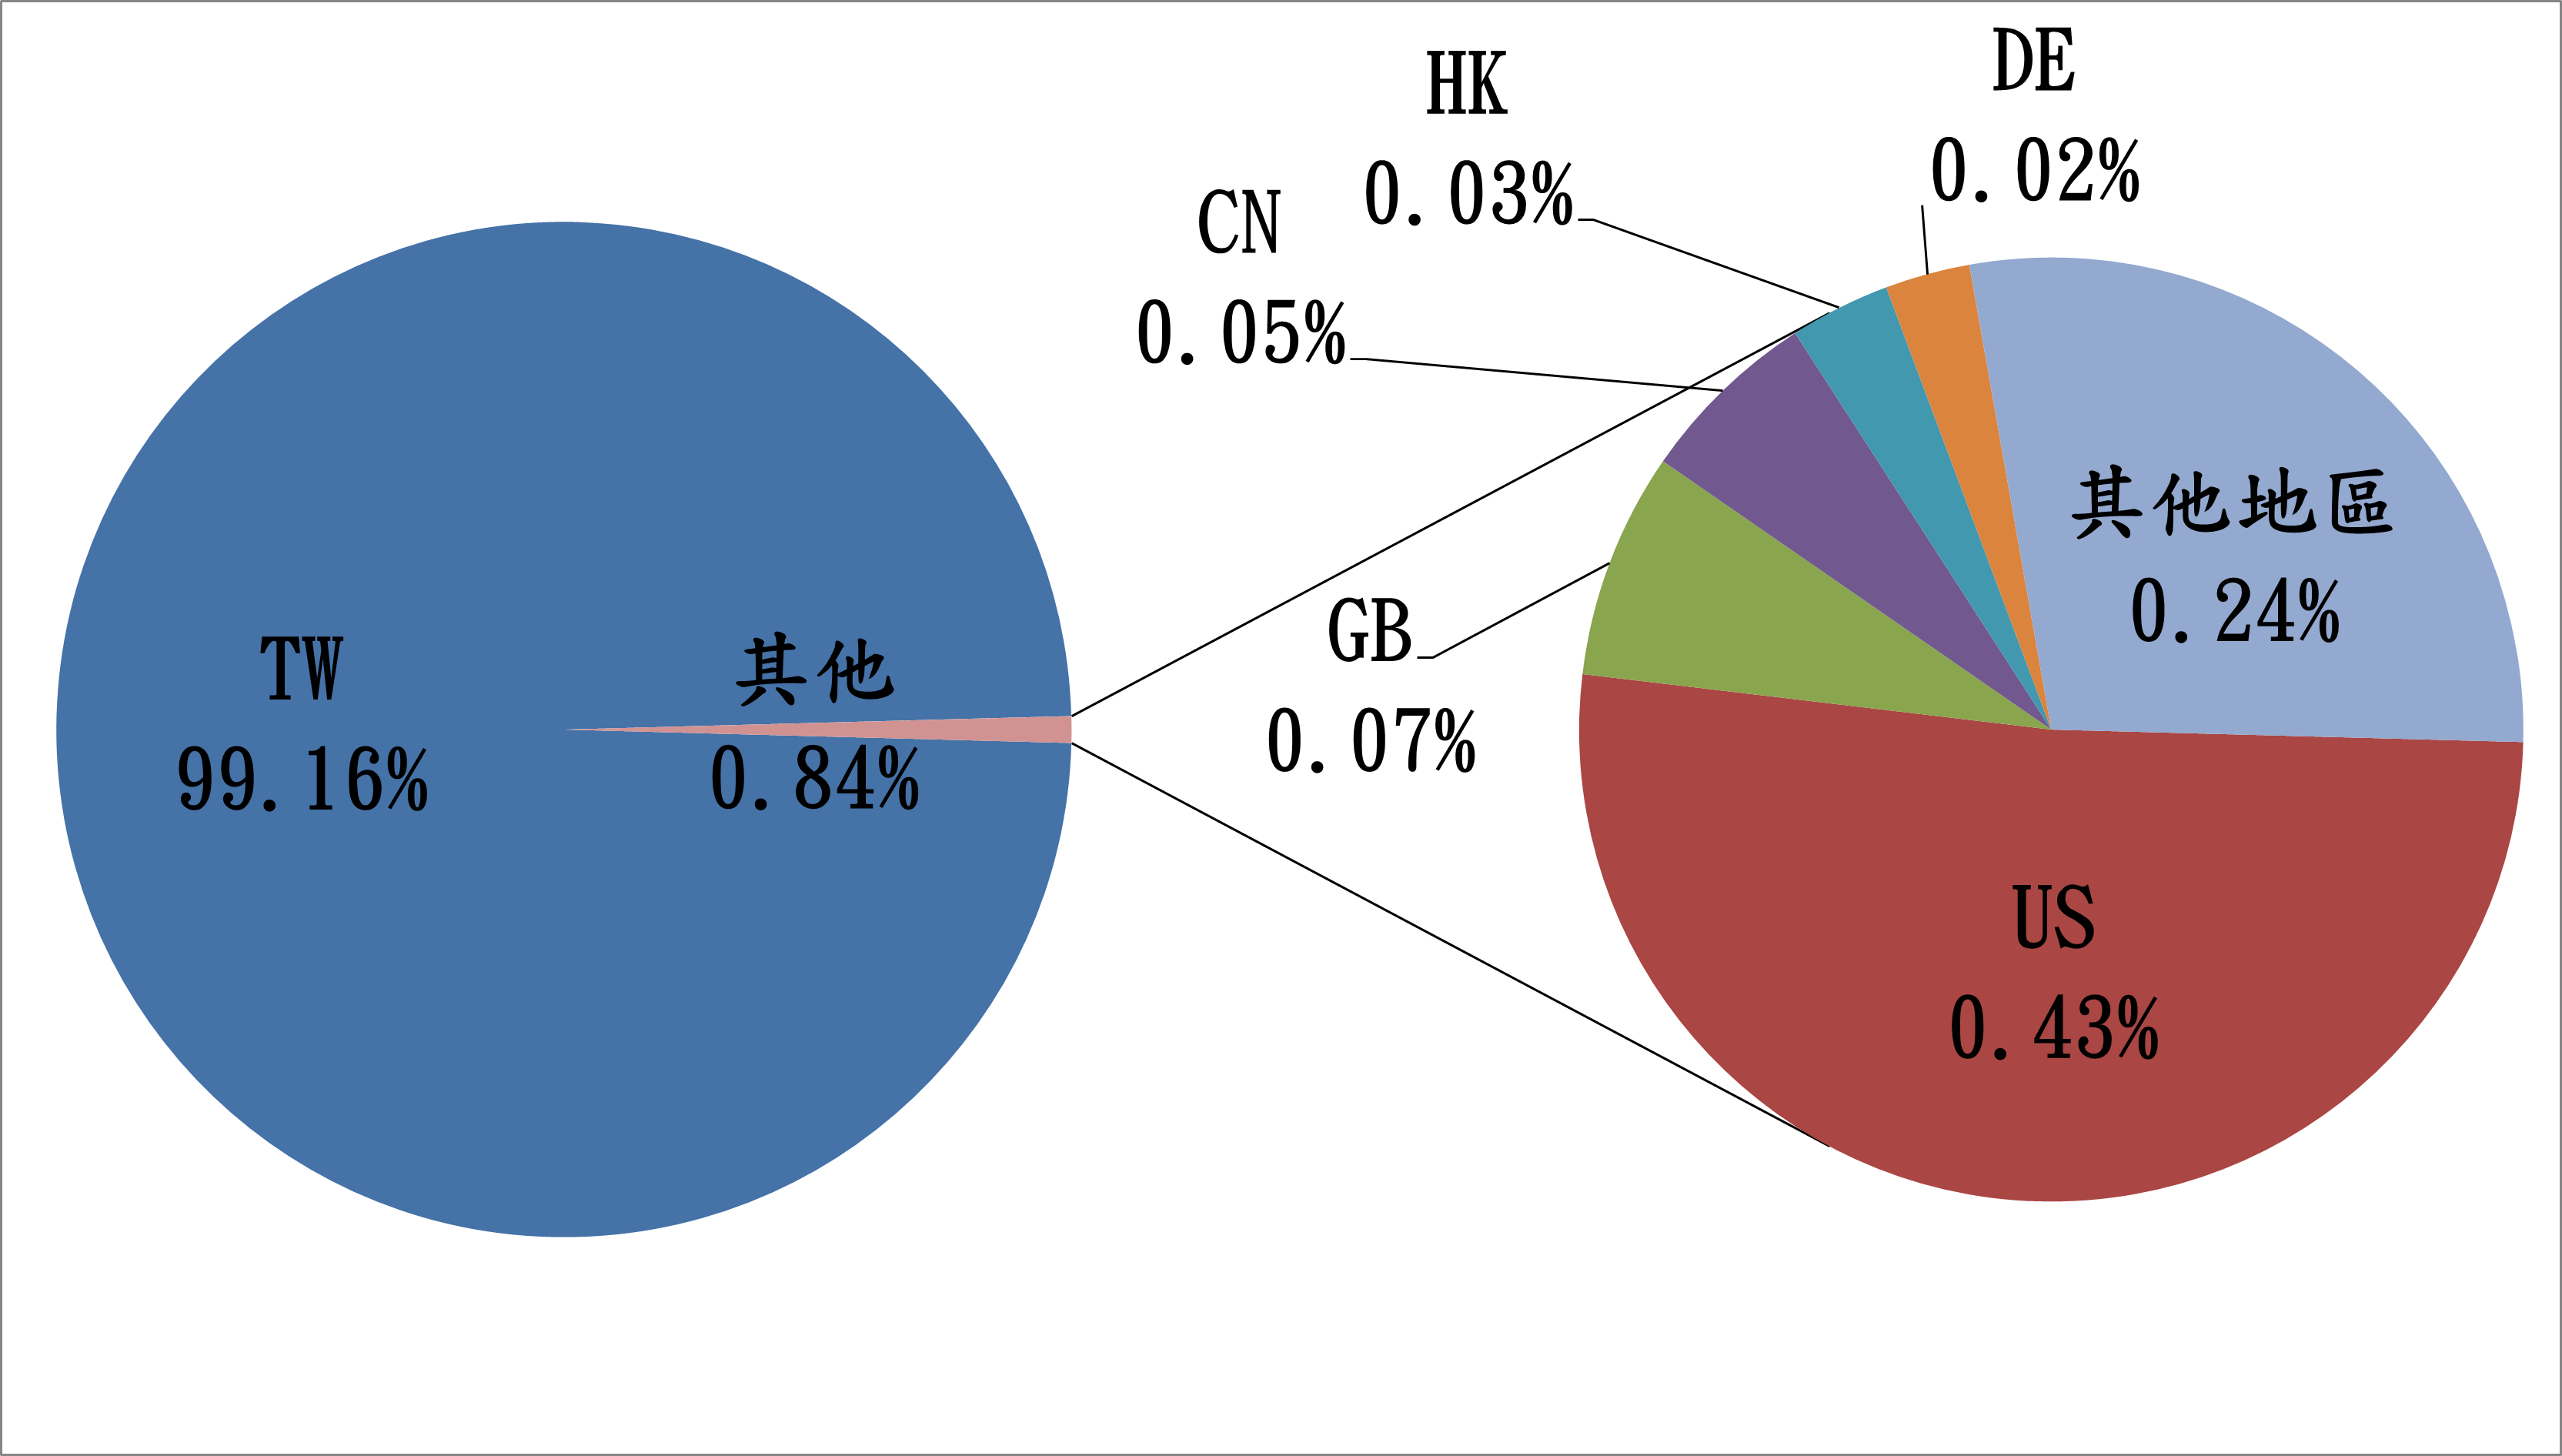 TW99.16% 其他0.84% DE0.02% HK0.03% CN0.05% GB0.07% US0.43% 其他地區0.24%